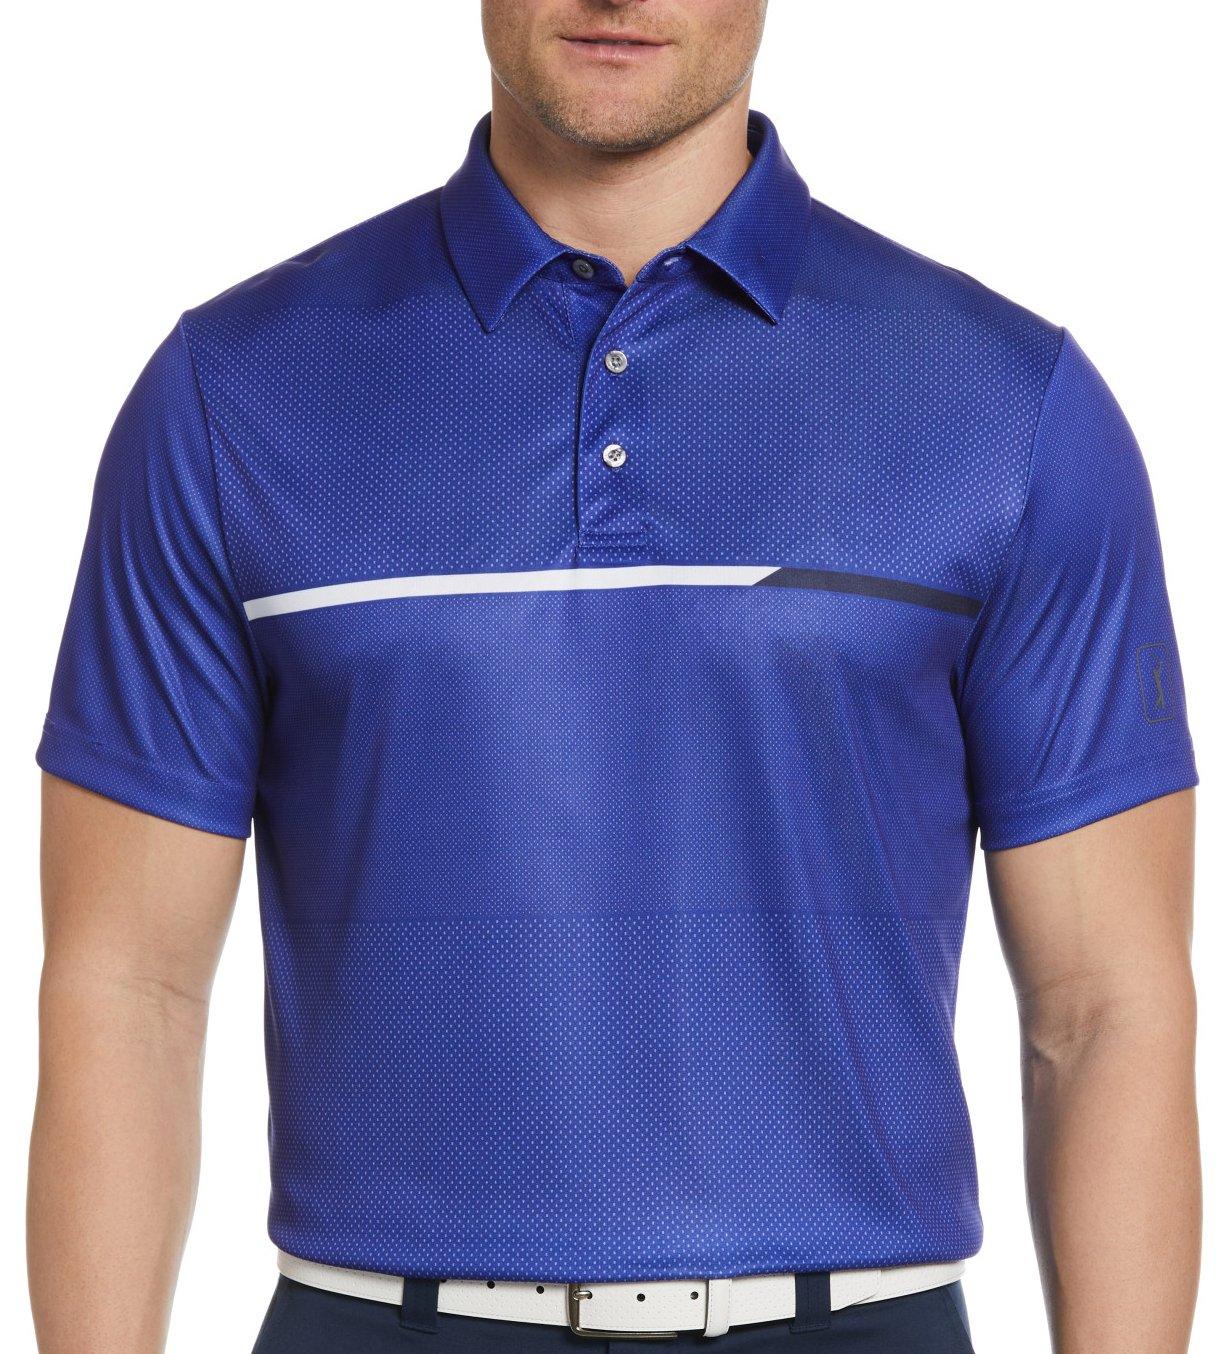 Mens Textured Block Stripe Short Sleeve Golf Polo